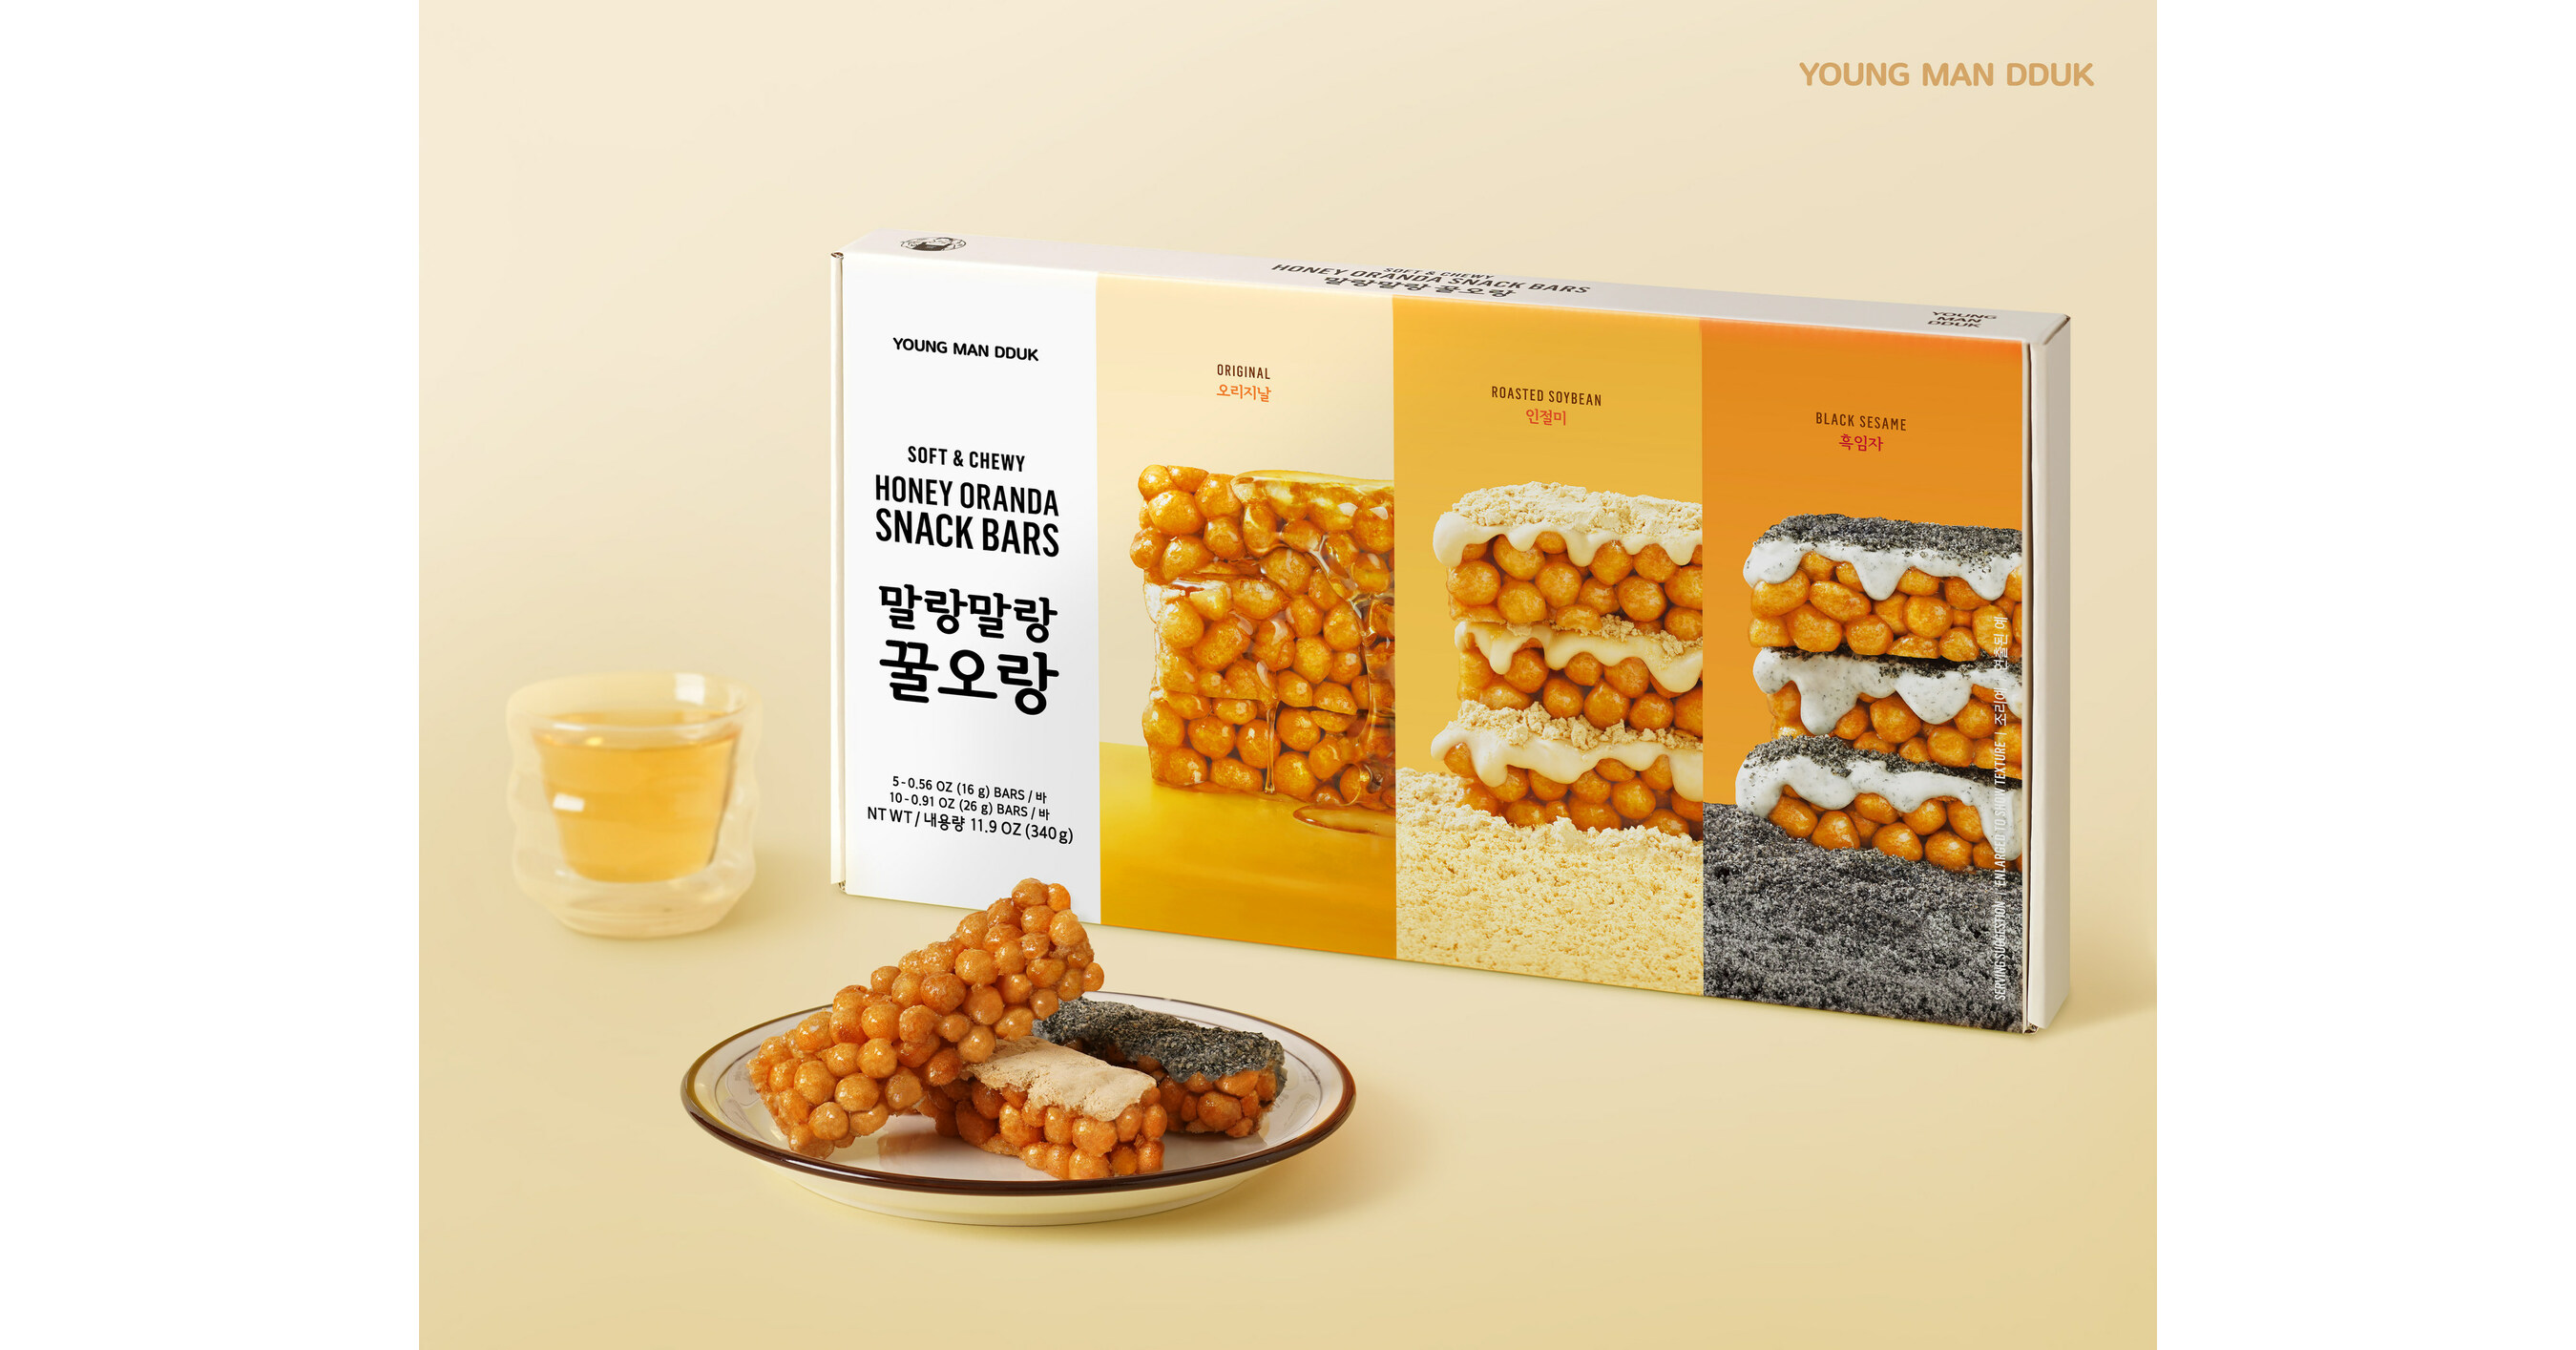 Widely Popular 'Honey Oranda Snack Bar' from YoungManDduk makes